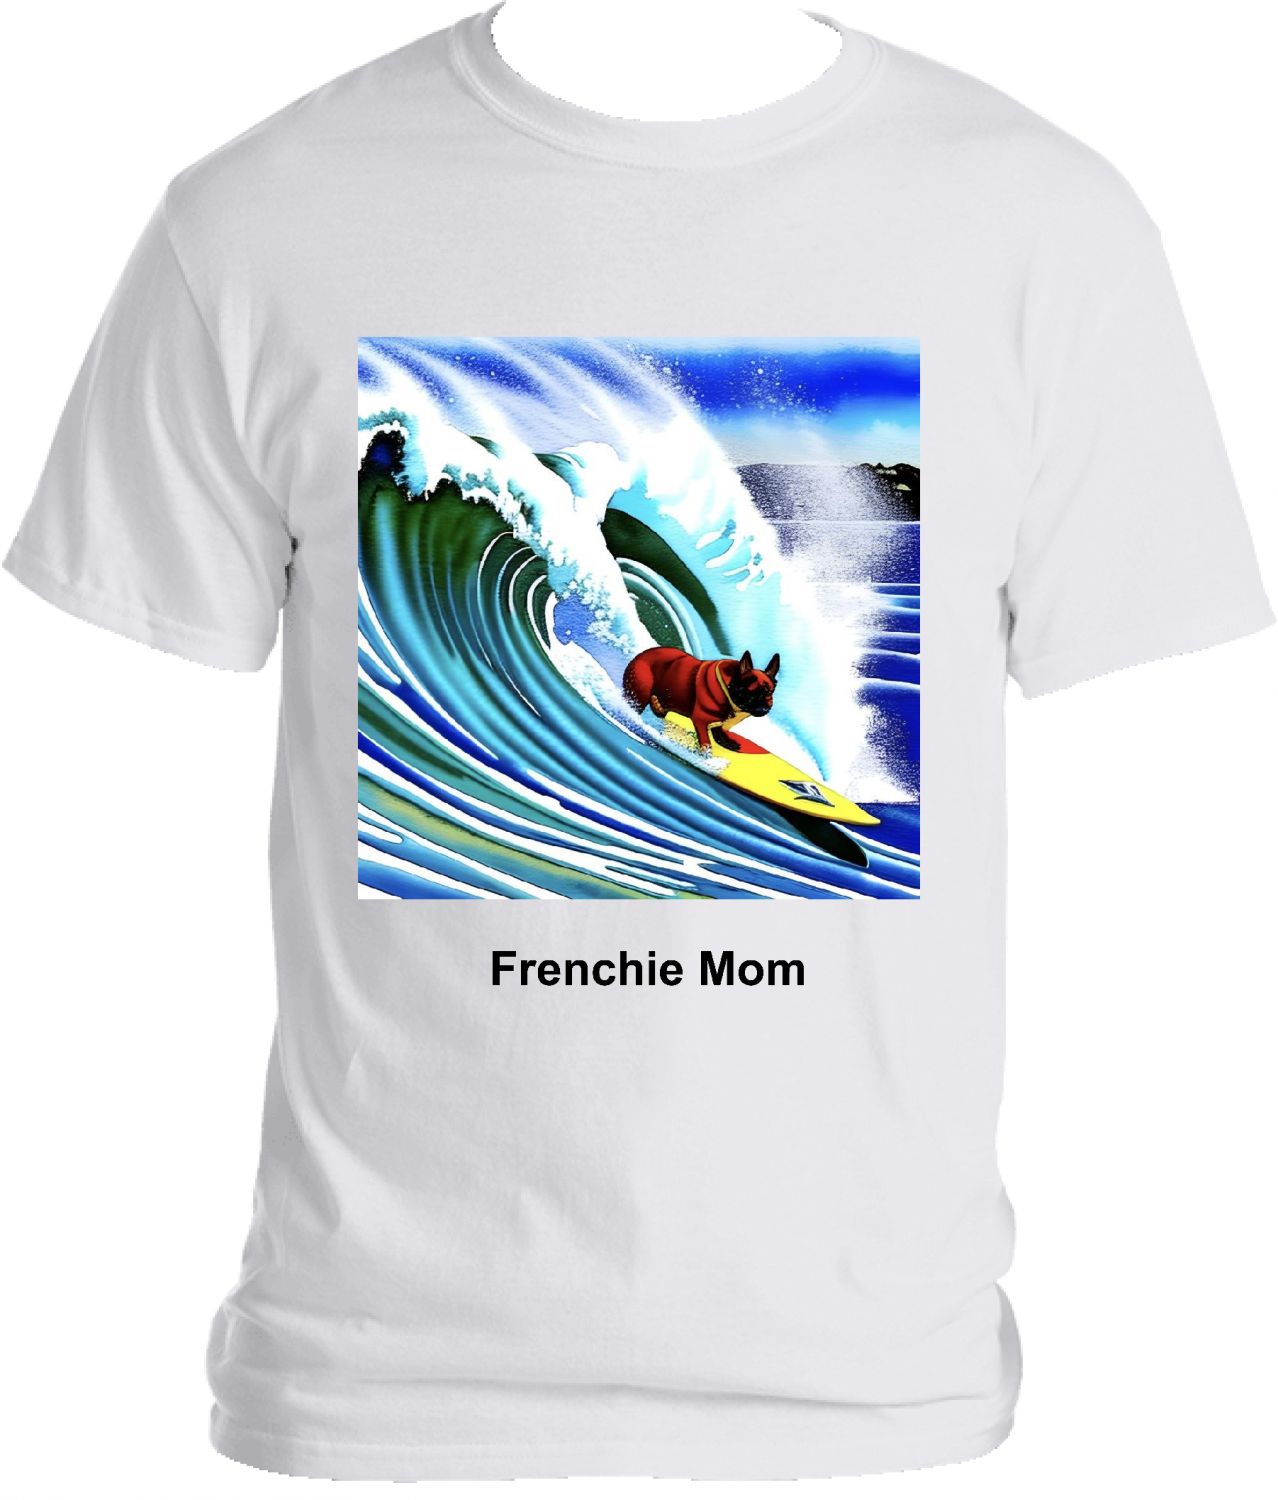 Frenchie Mom Surfer T-shirt